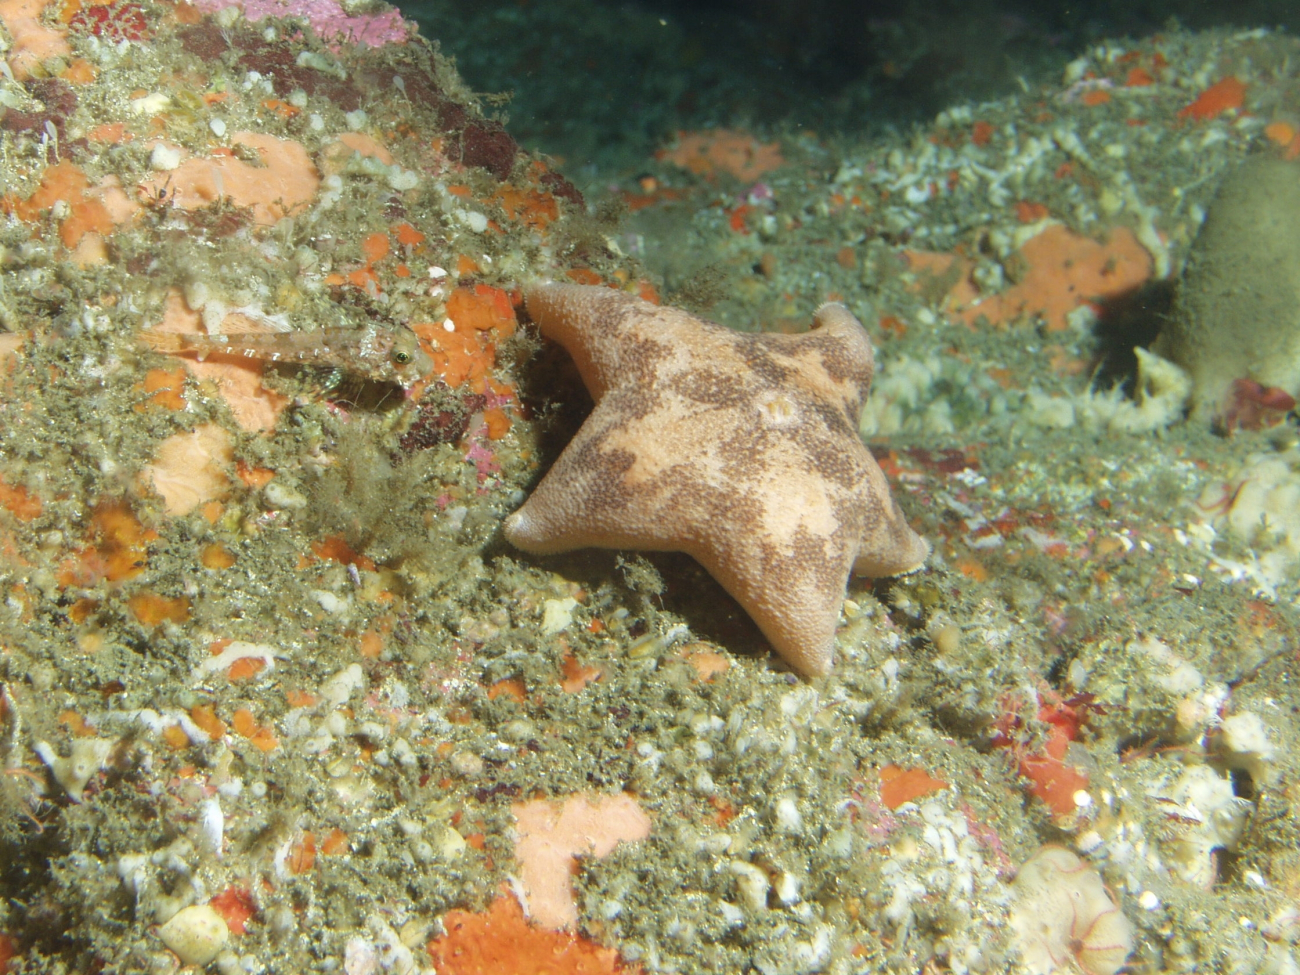 Cushion sea star (Pteraster tesselatus) in rocky reef habitat up close